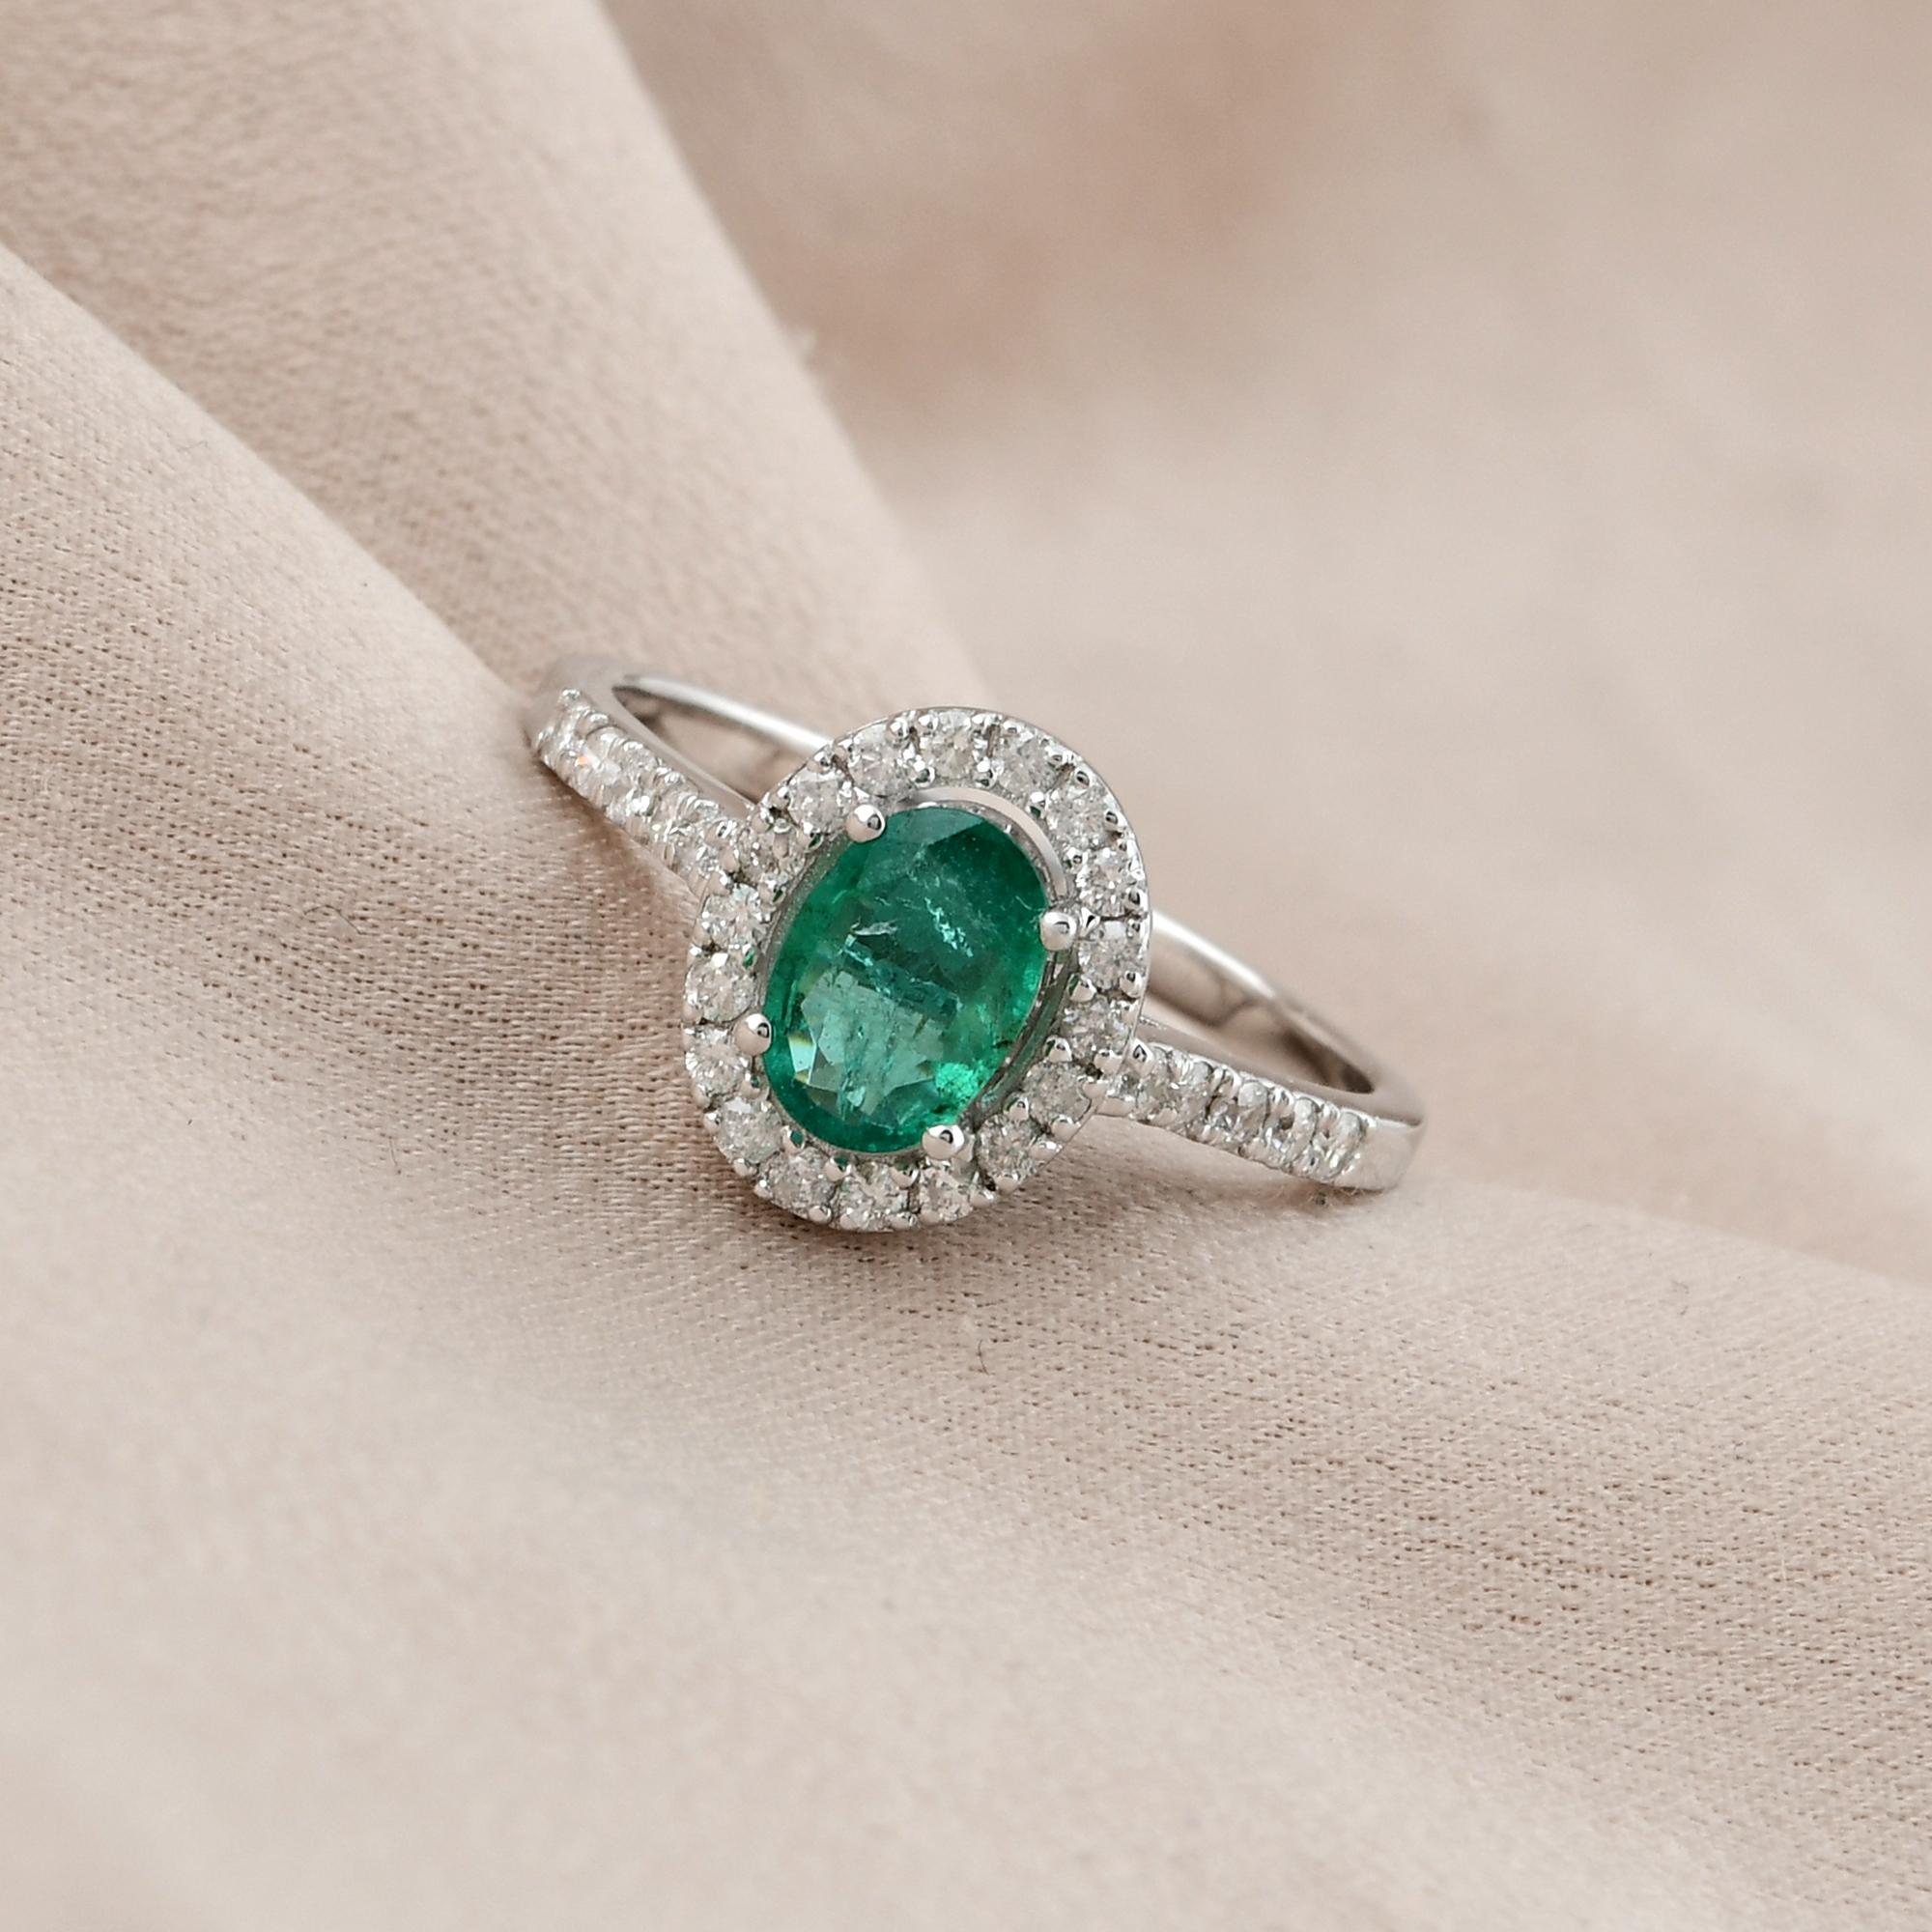 For Sale:  Oval Zambian Emerald Gemstone Ring Pave Diamond 18 Karat White Gold Fine Jewelry 4